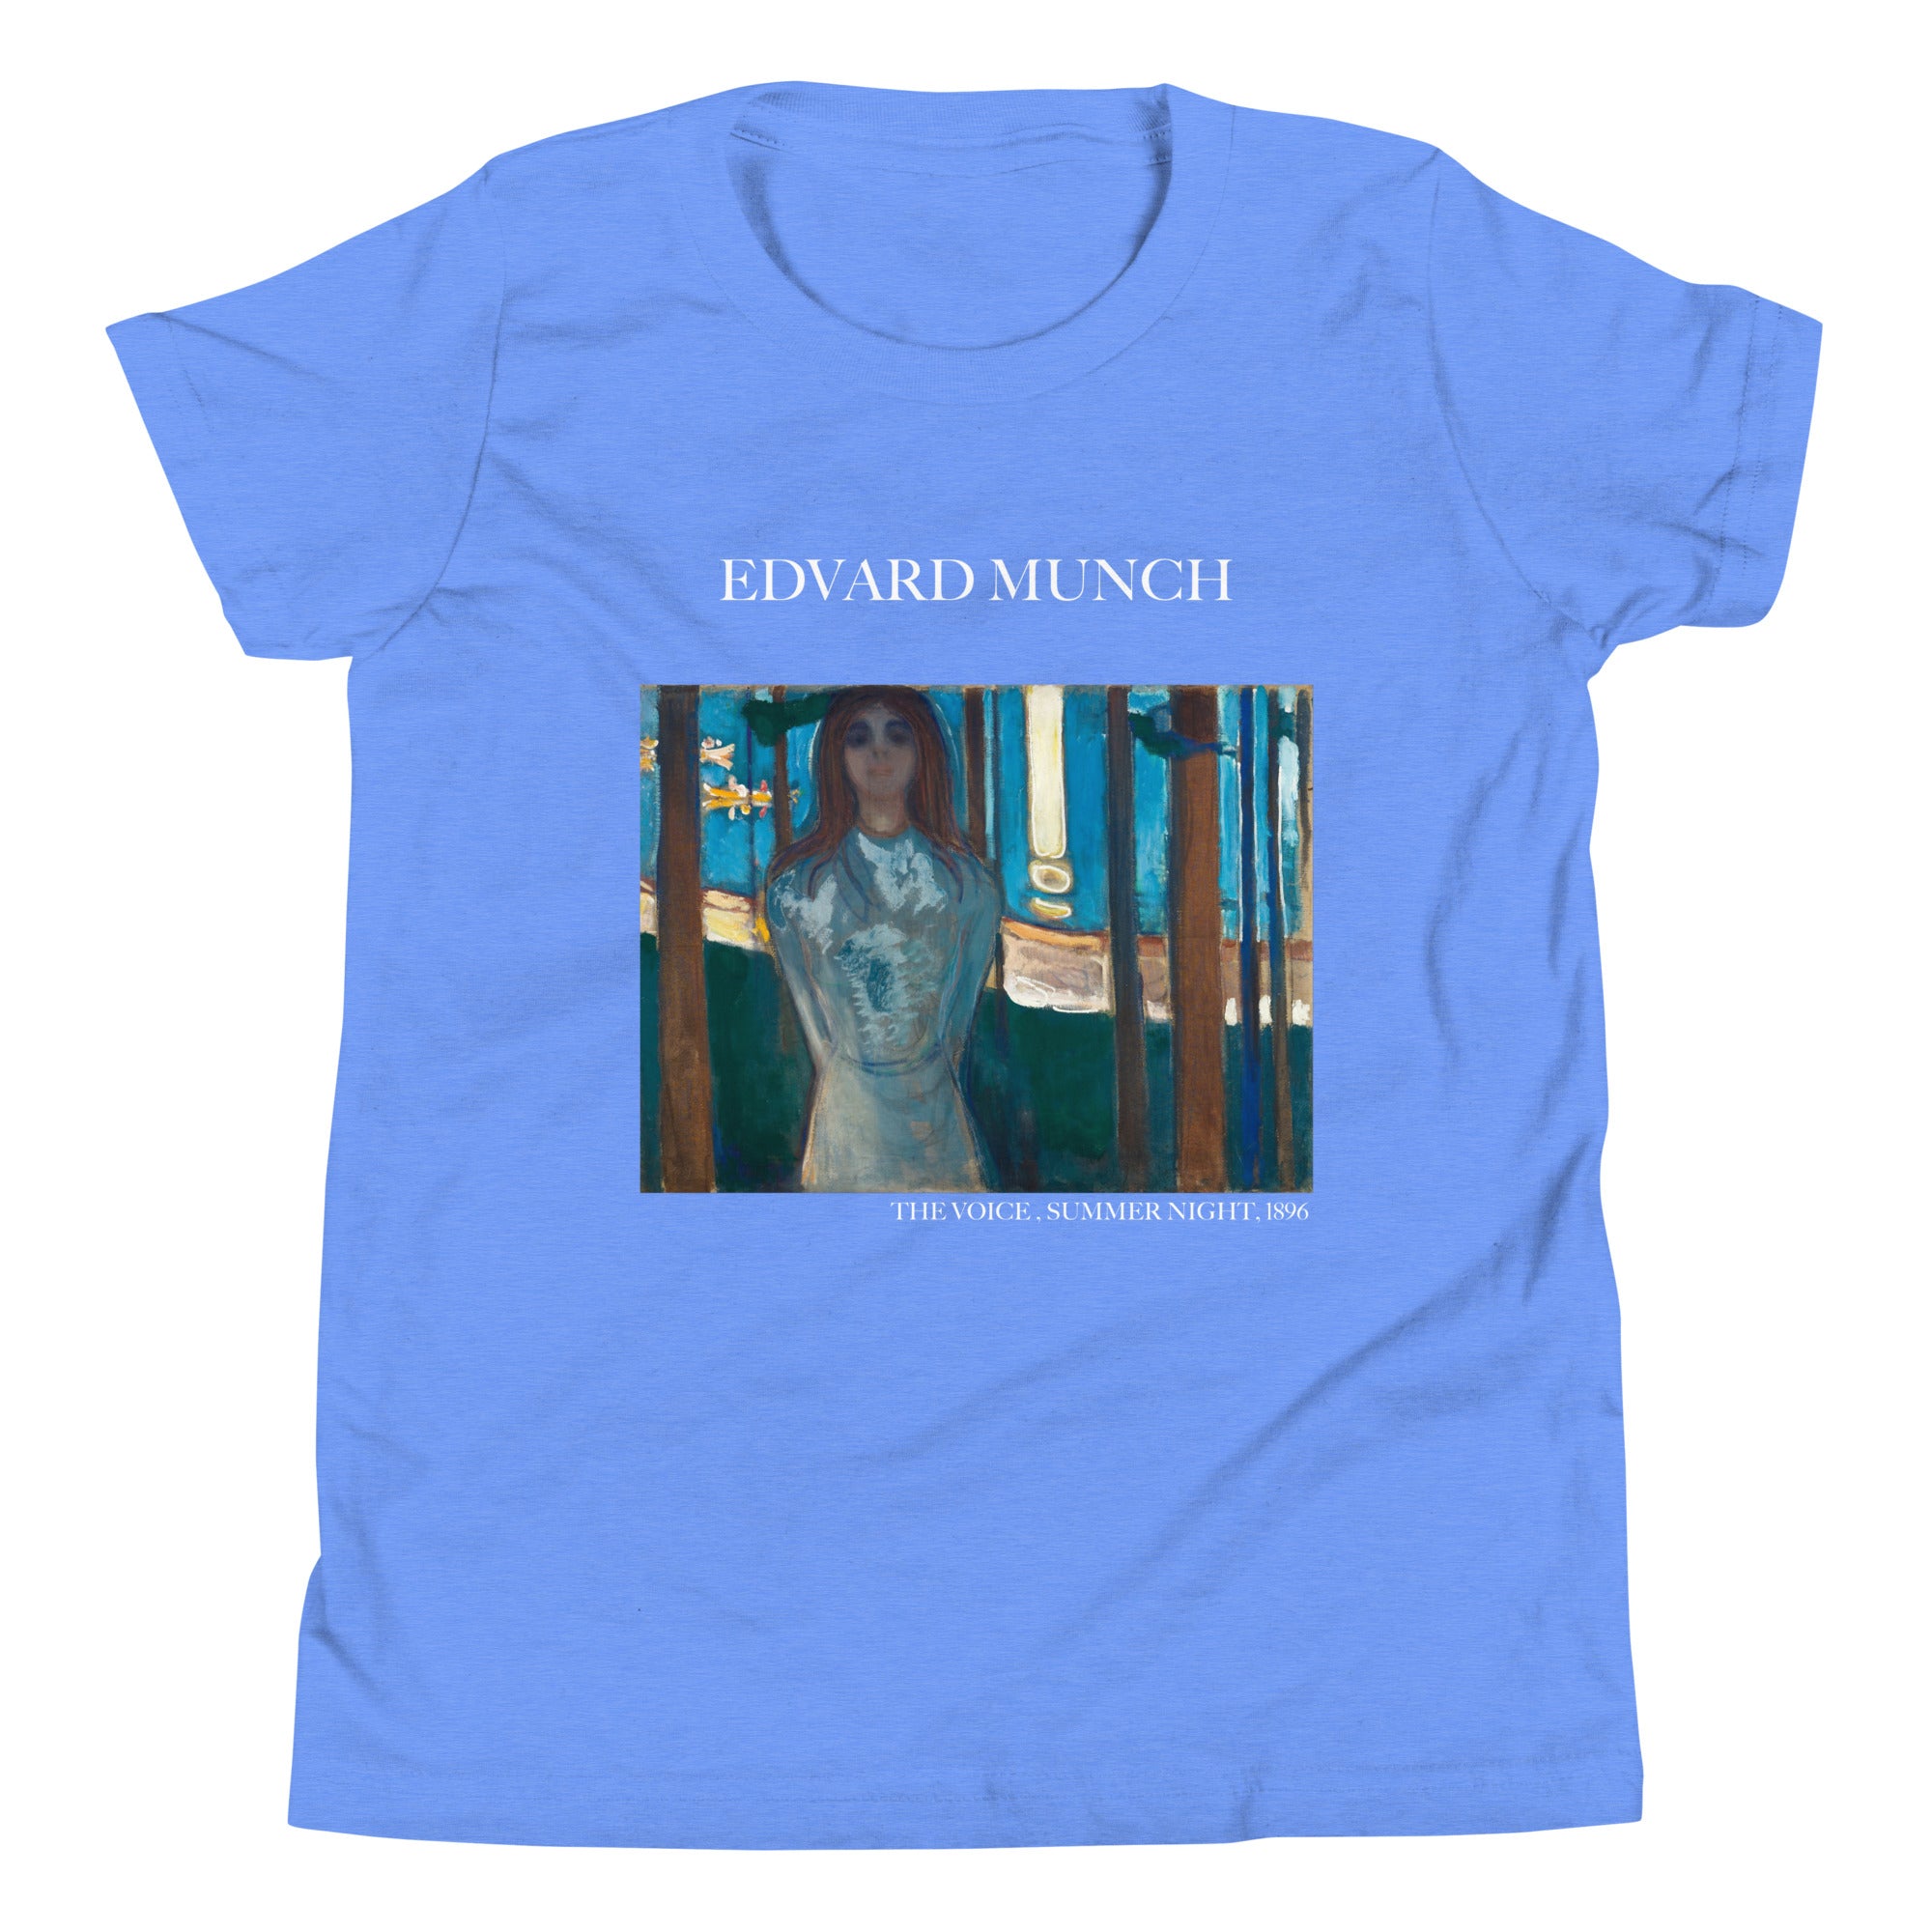 Edvard Munch 'The Voice, Summer Night' Famous Painting Short Sleeve T-Shirt | Premium Youth Art Tee